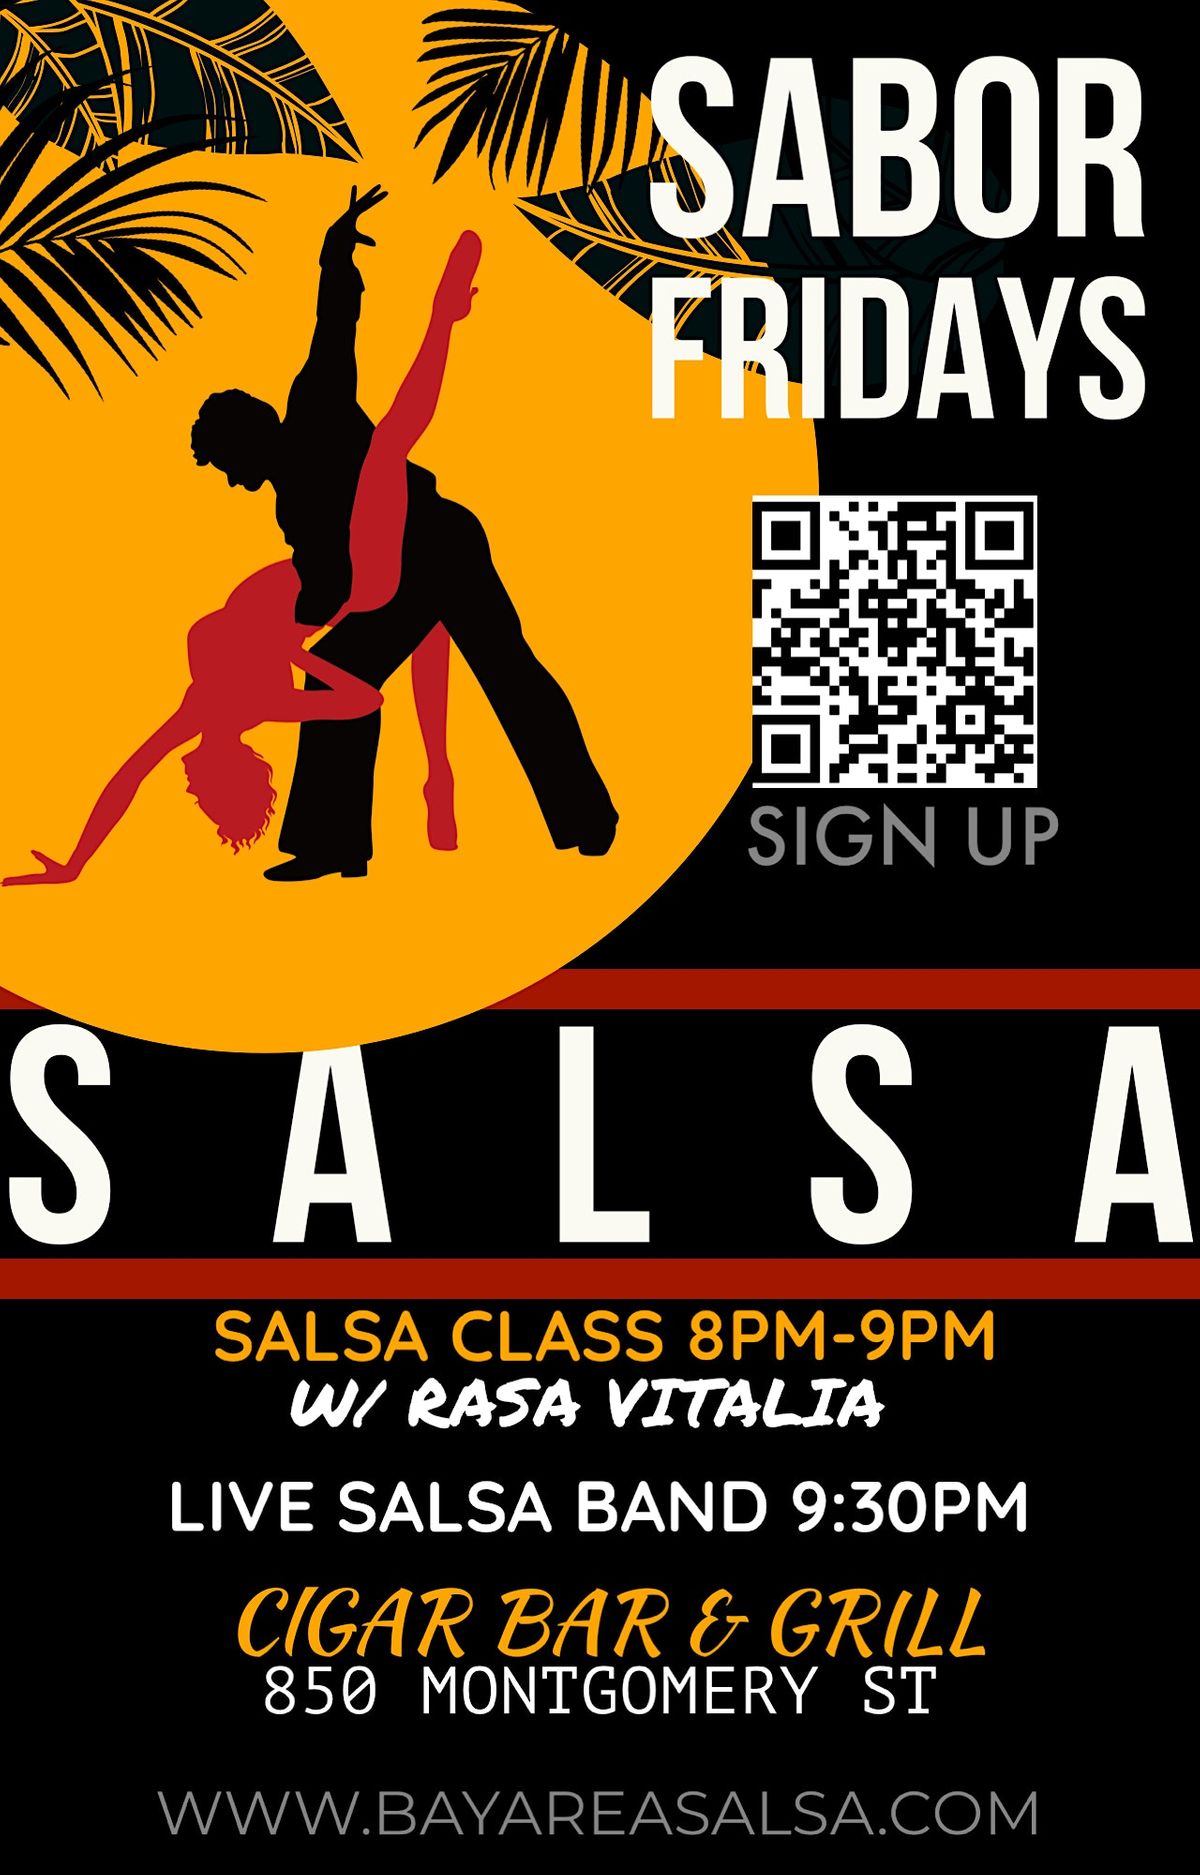 Friday Night Salsa Class at the Cigar Bar